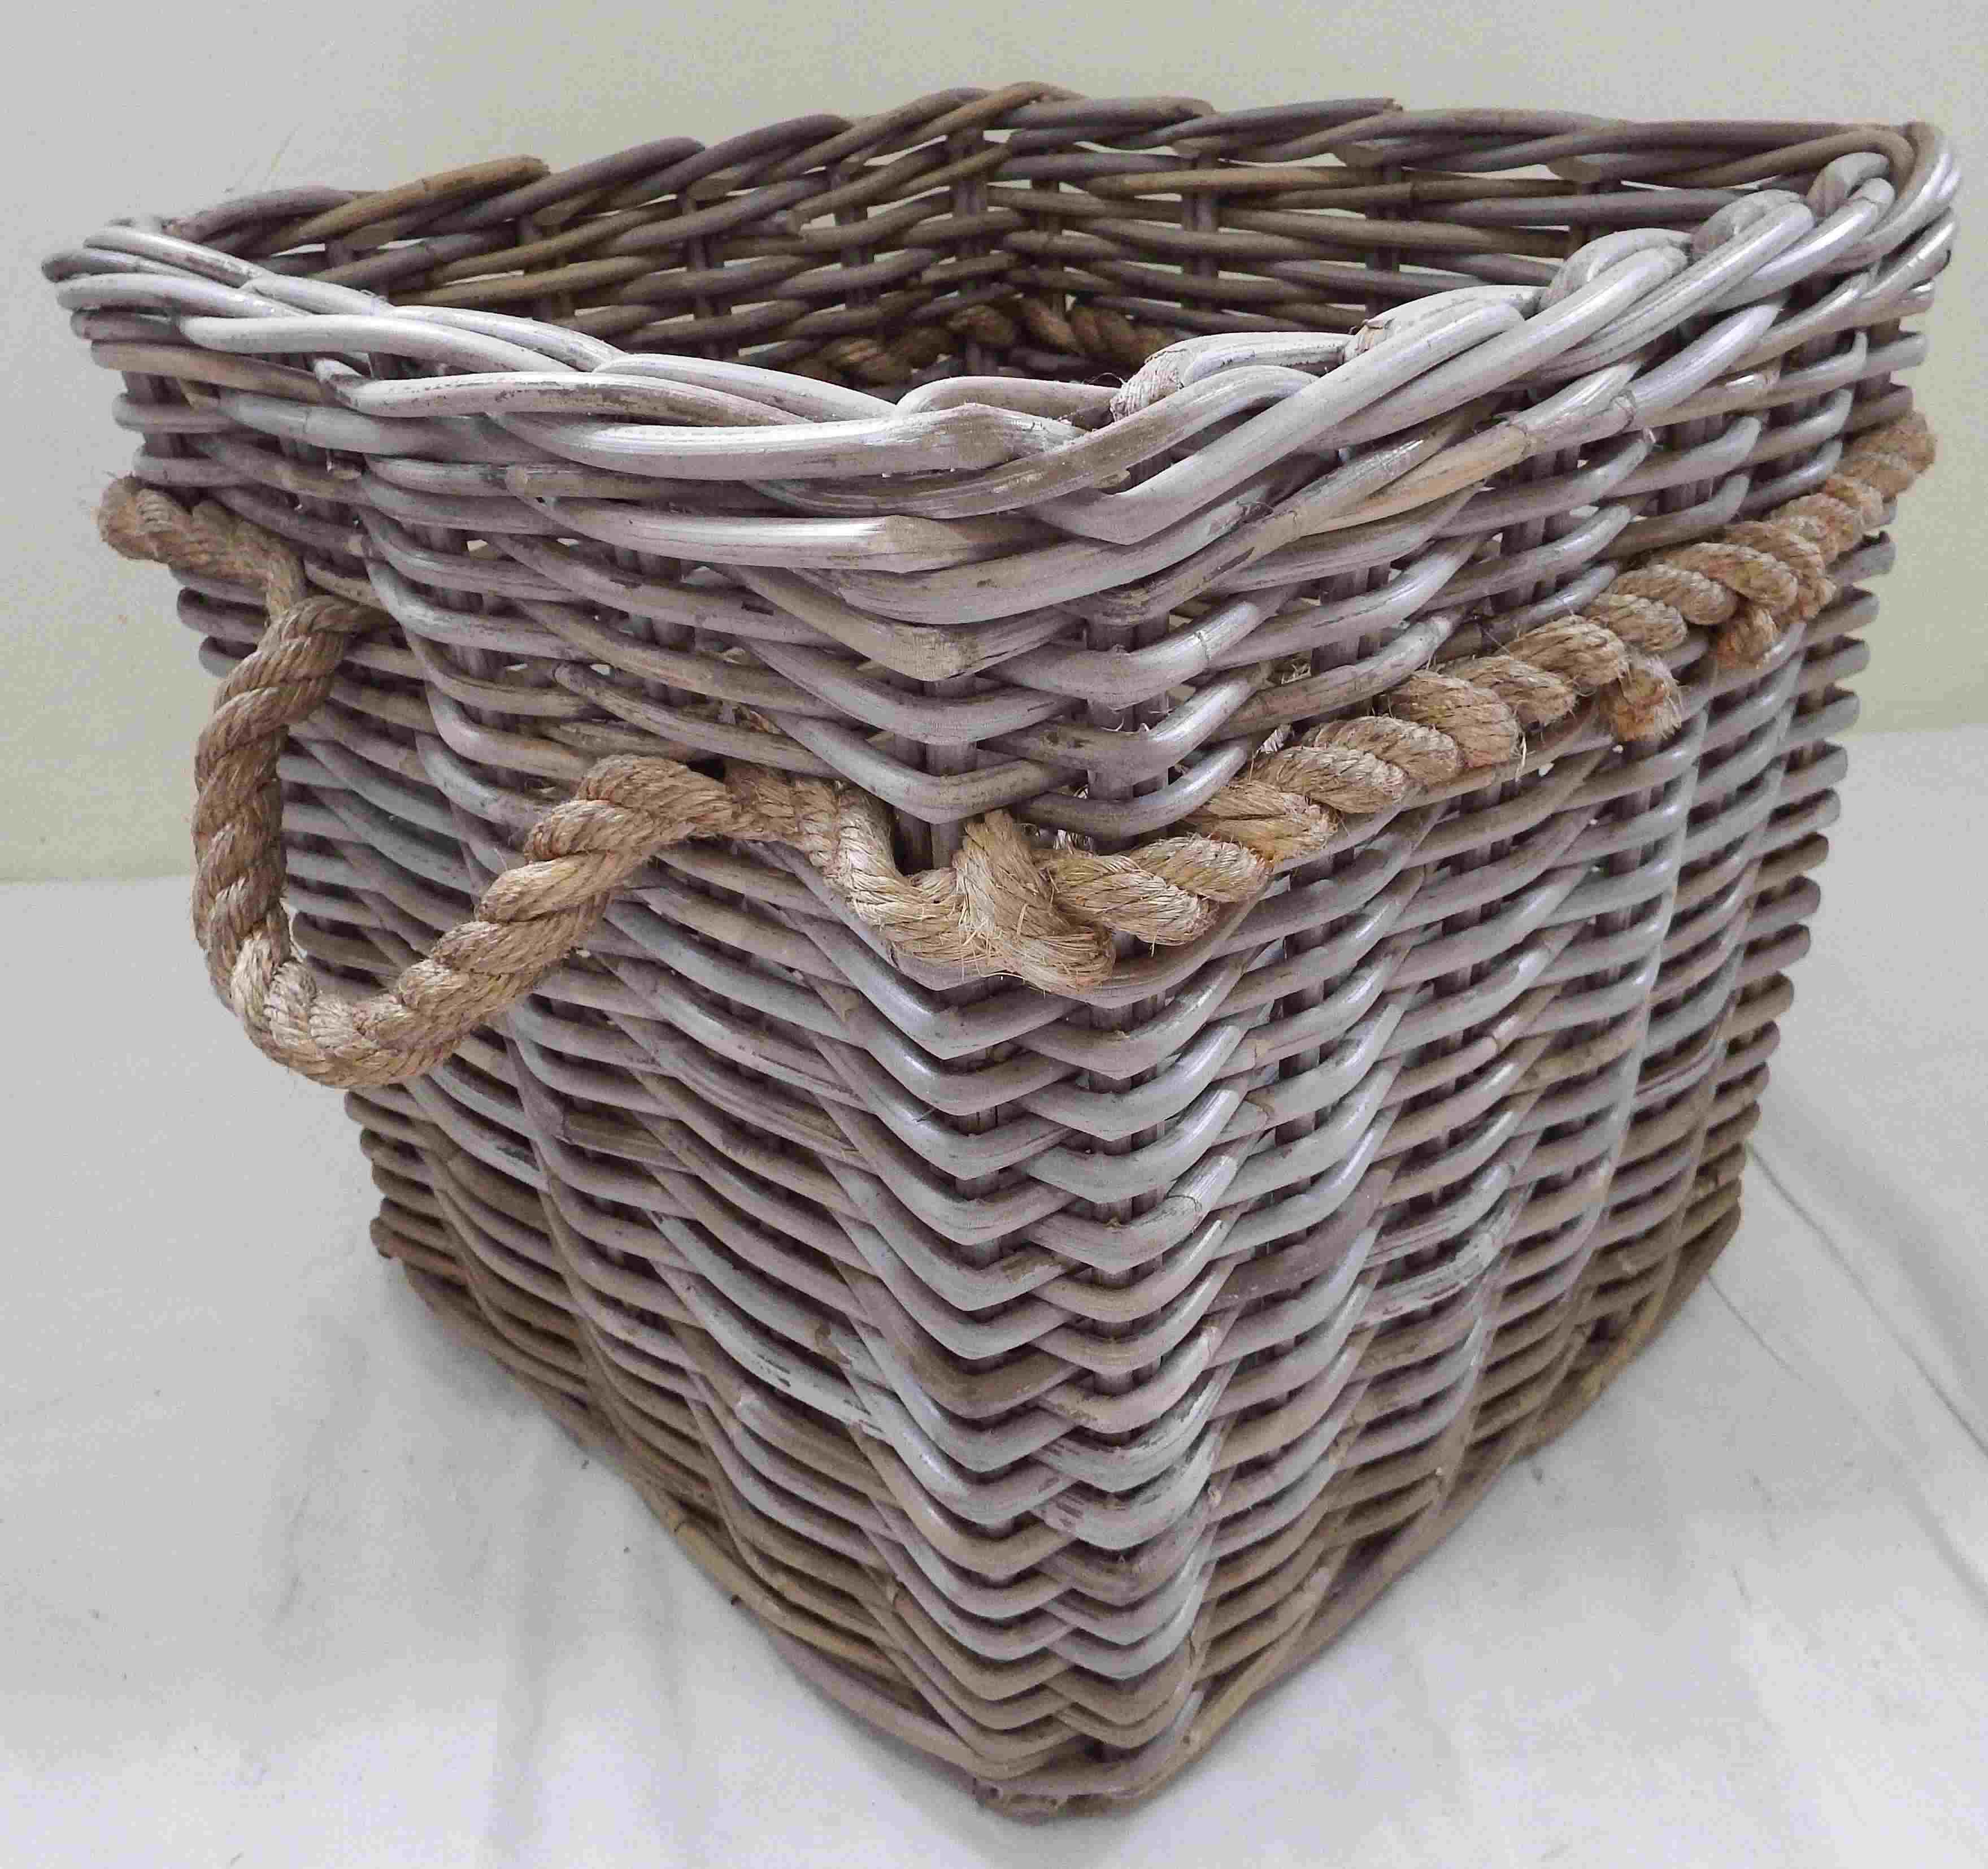 Rattan grey kubu/kobo,Garden basket, flower basket, flower pot, log basket